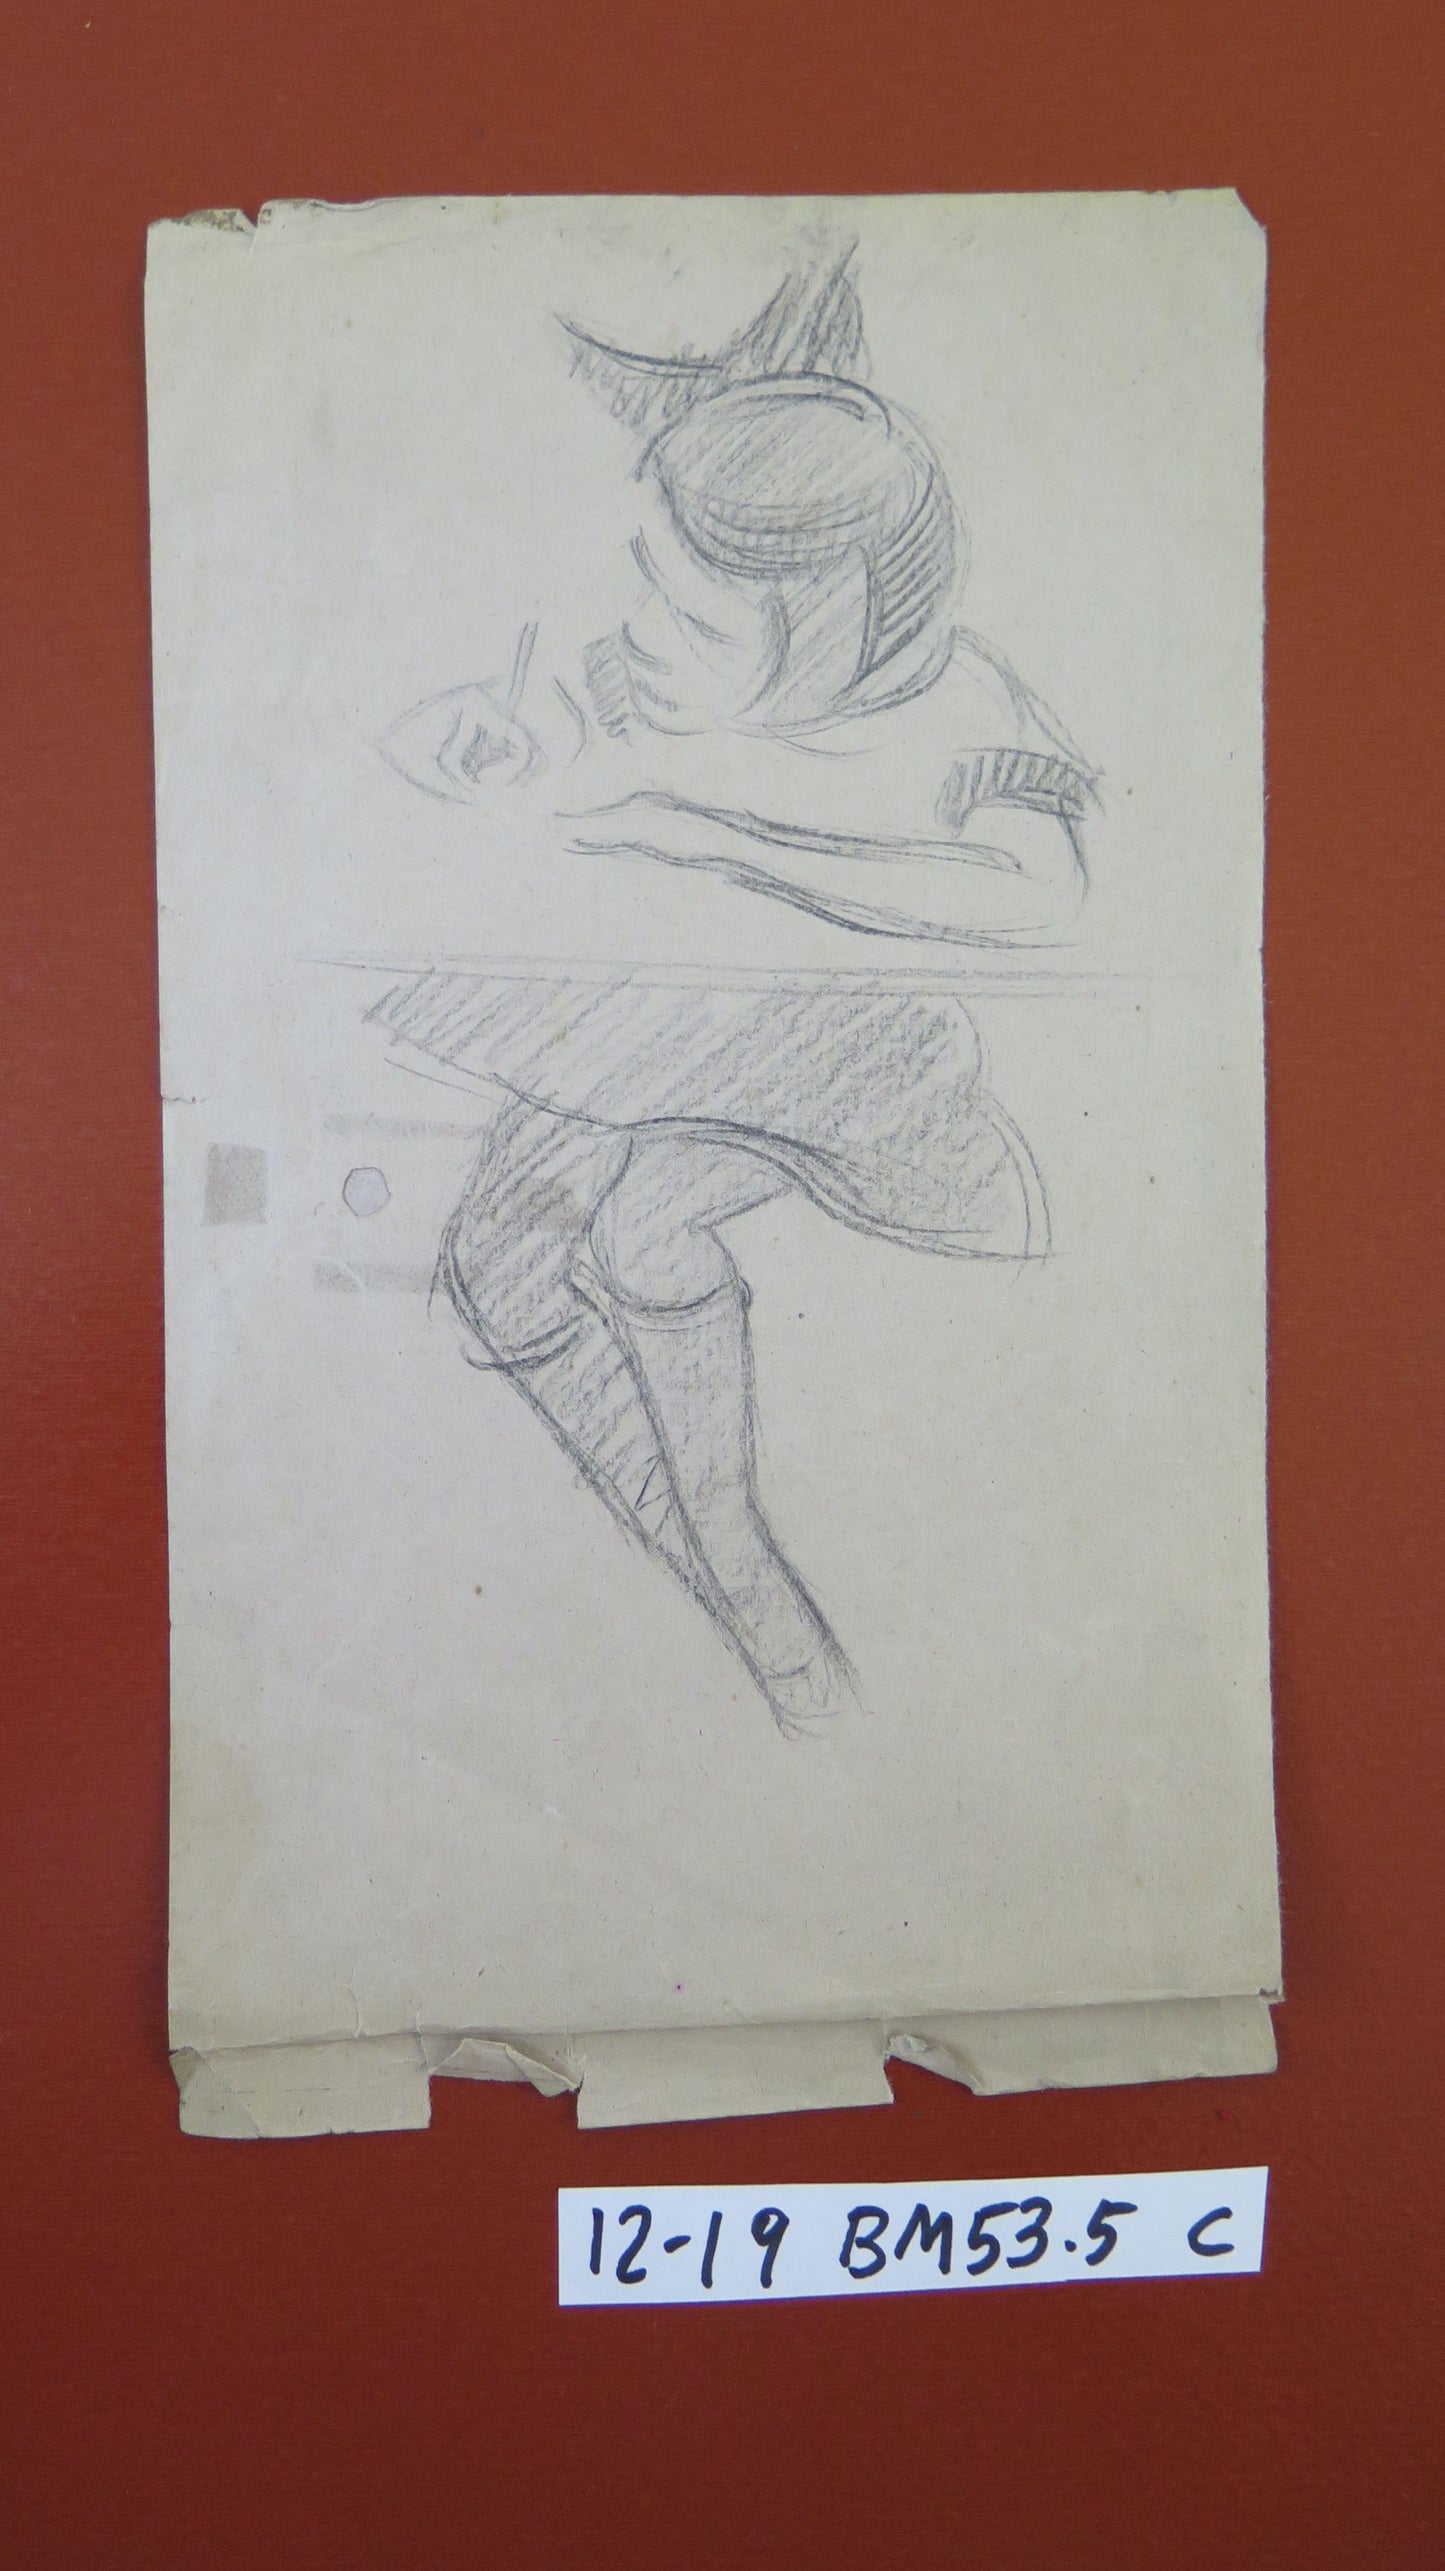 ANTIQUE PENCIL DRAWING ON PAPER FULL-FIGURE PORTRAIT OF A LITTLE GIRL BM53.5C